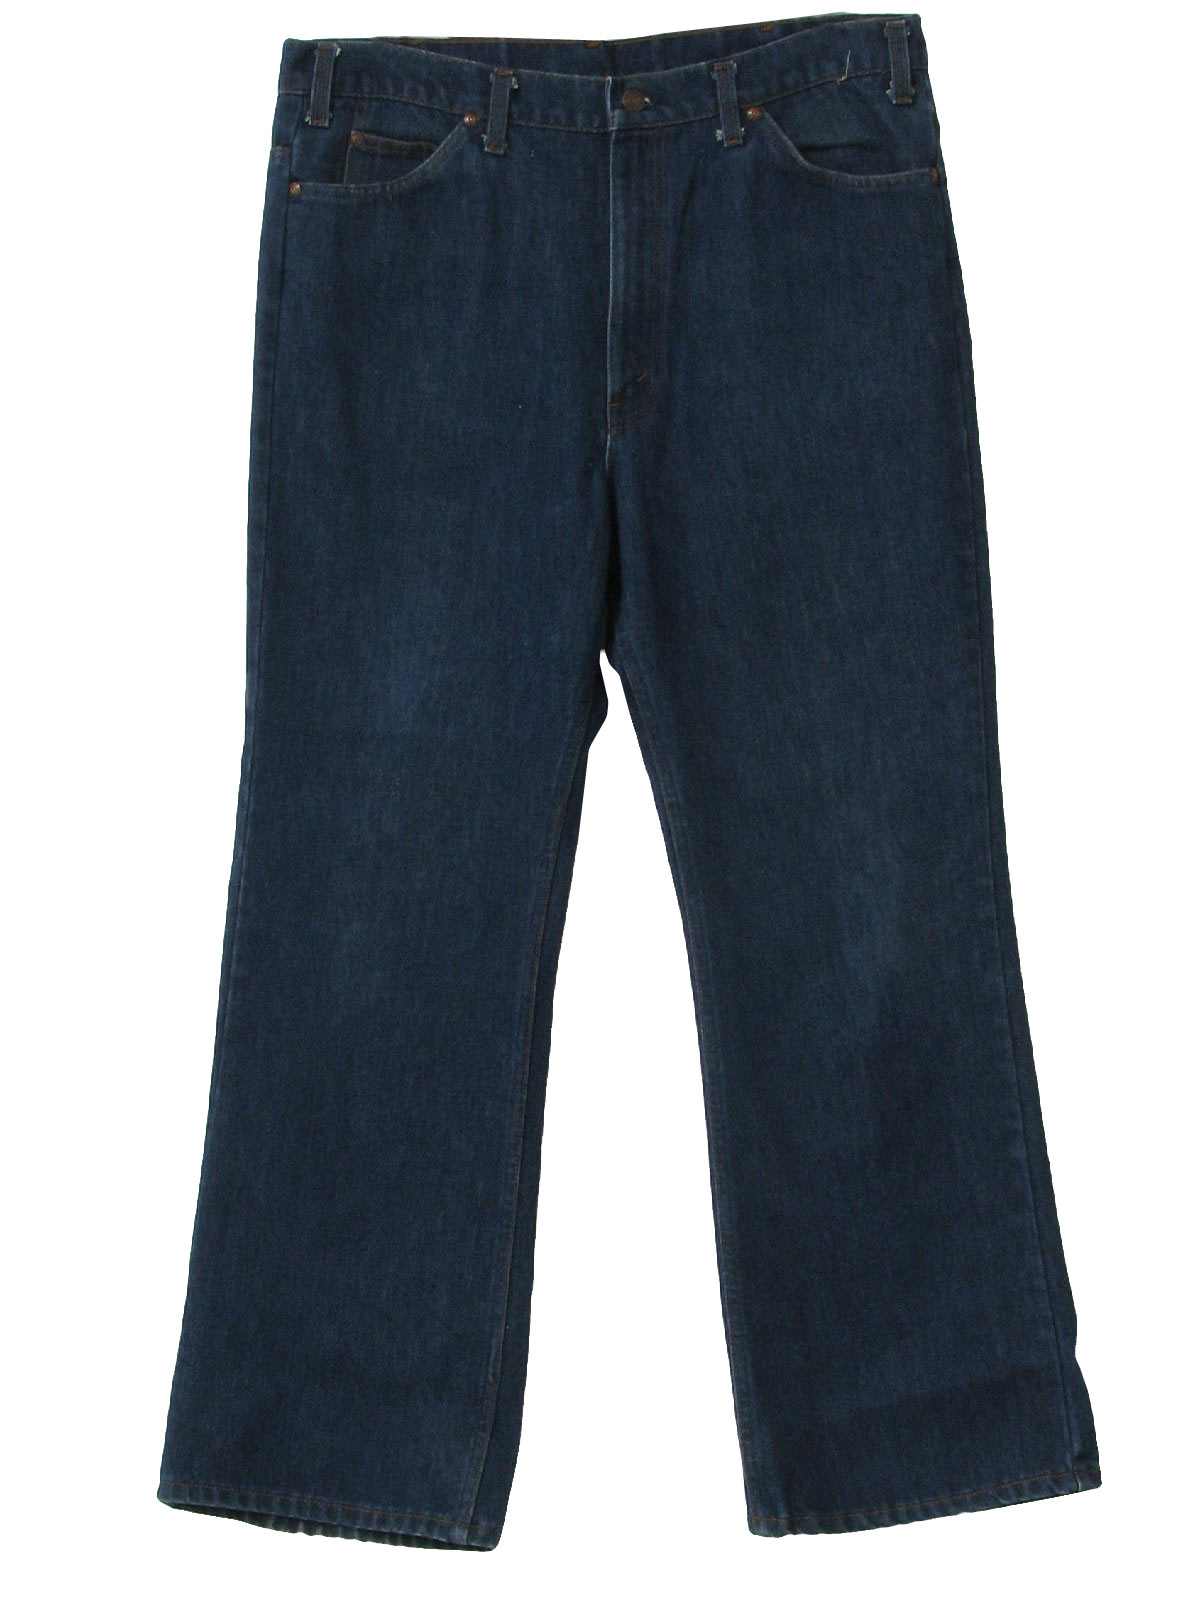 Plain Pockets 70's Vintage Flared Pants / Flares: 70s -Plain Pockets ...